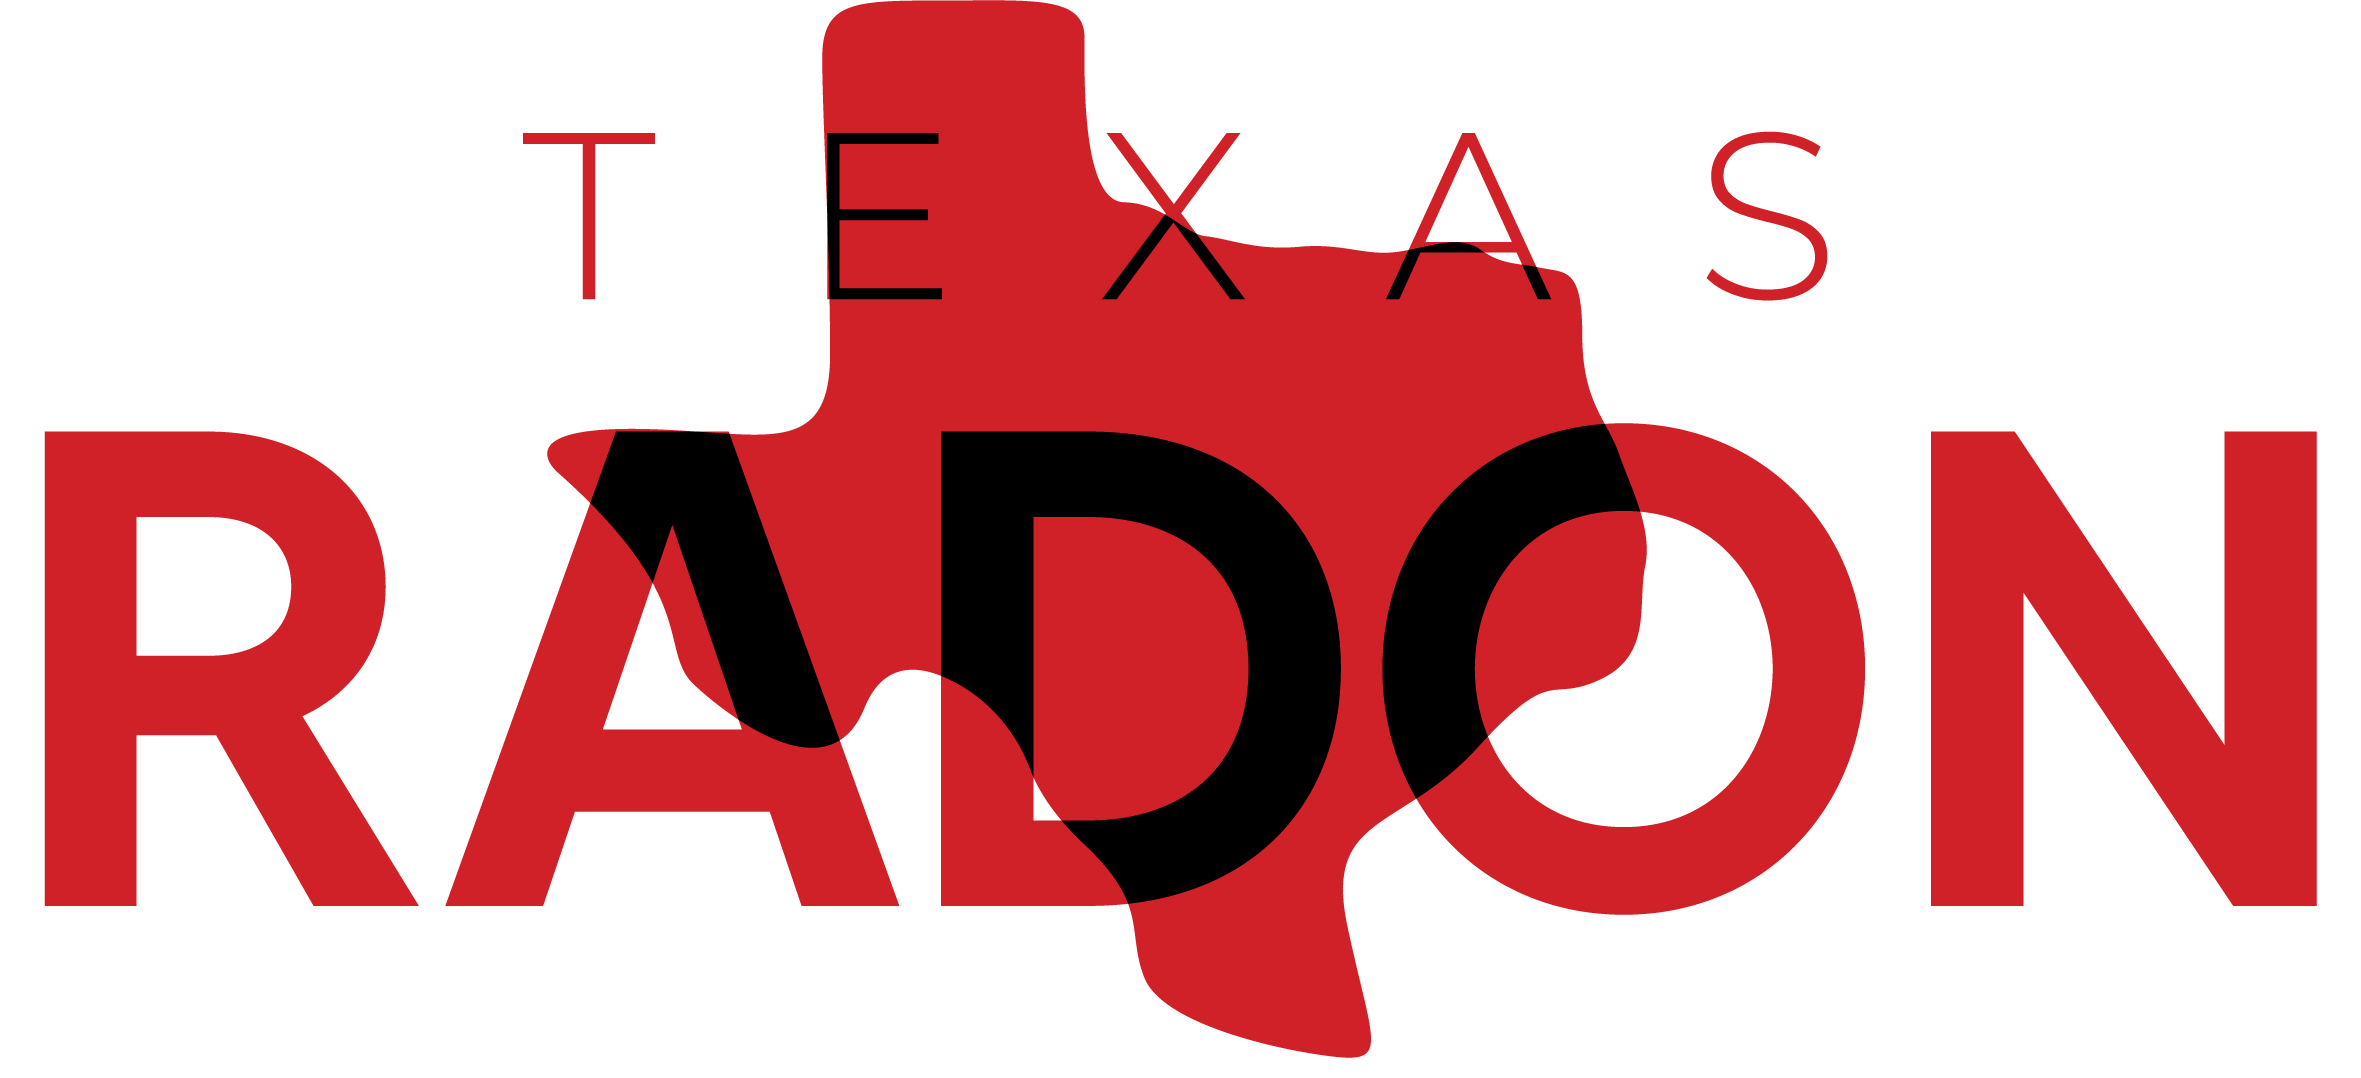 Texas Radon Group logo